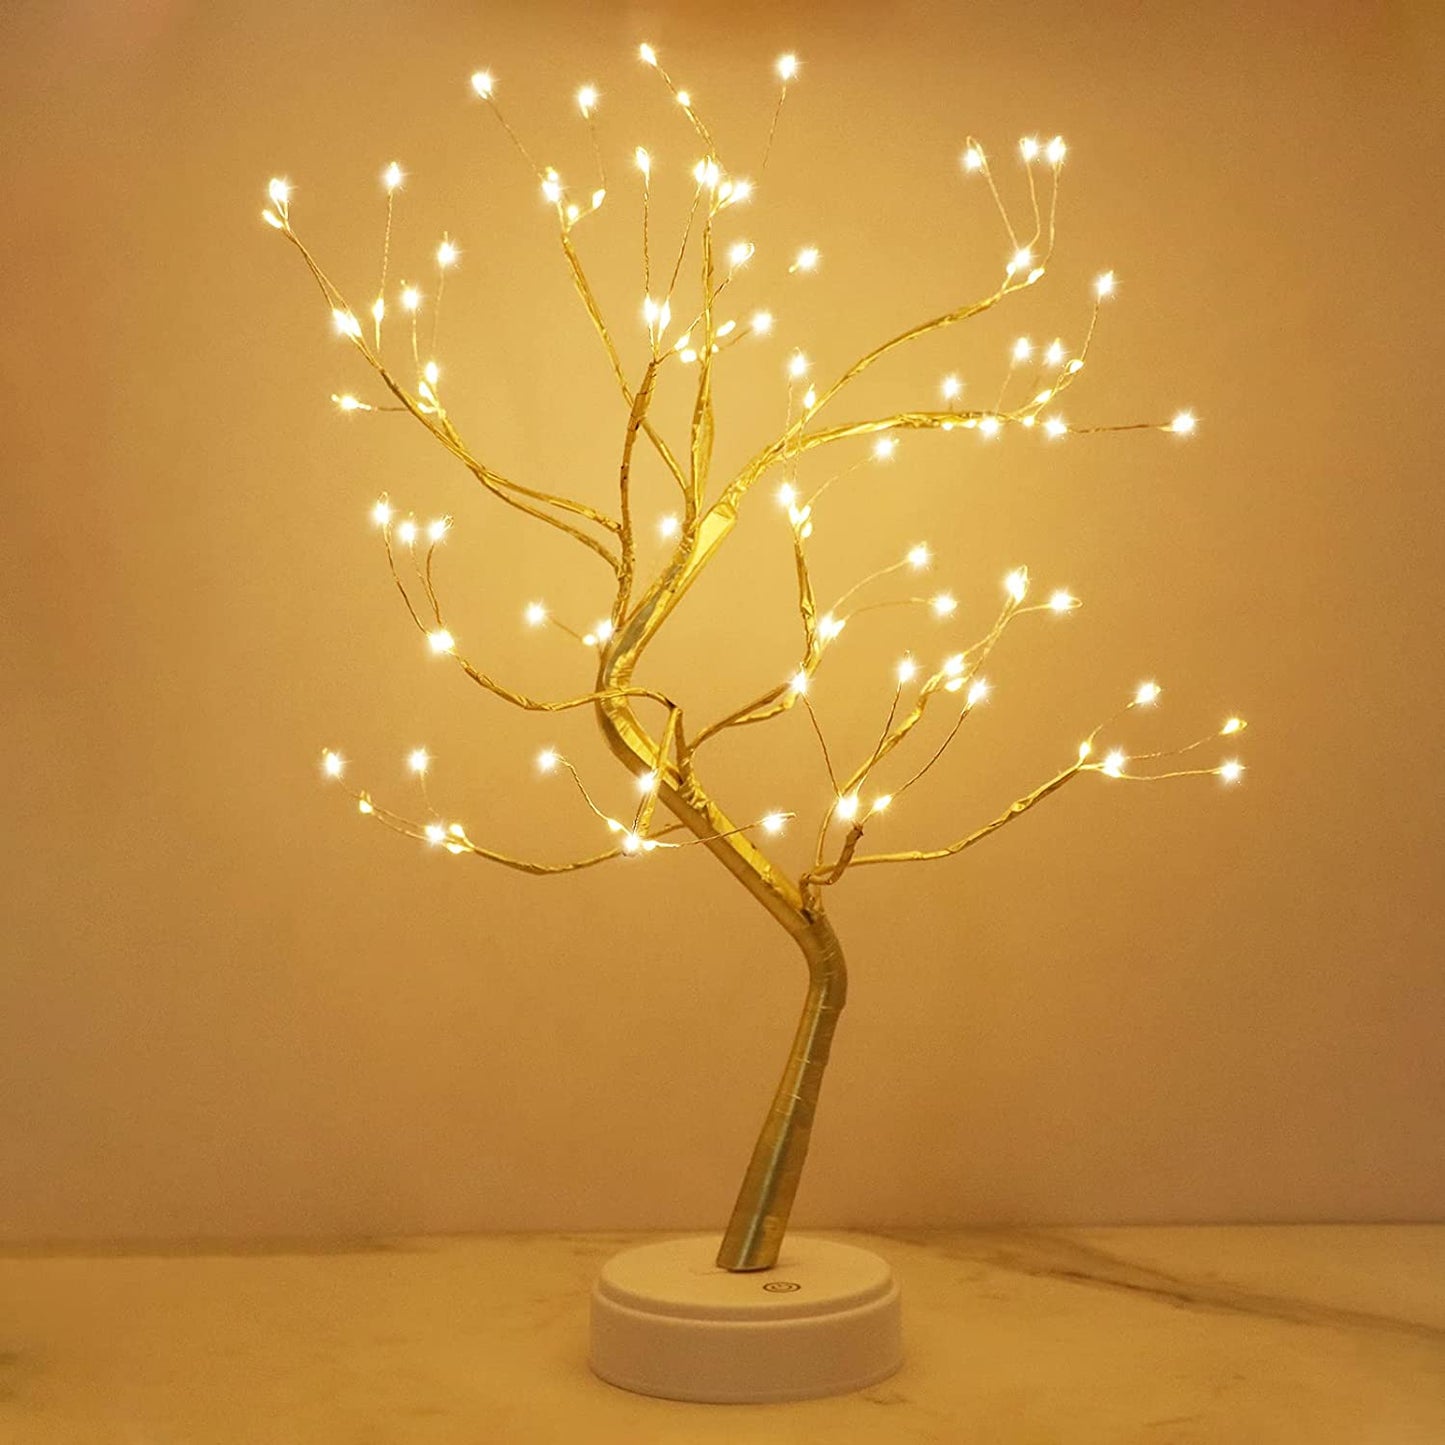 NightAngel360™ Tree Lamp 2.0